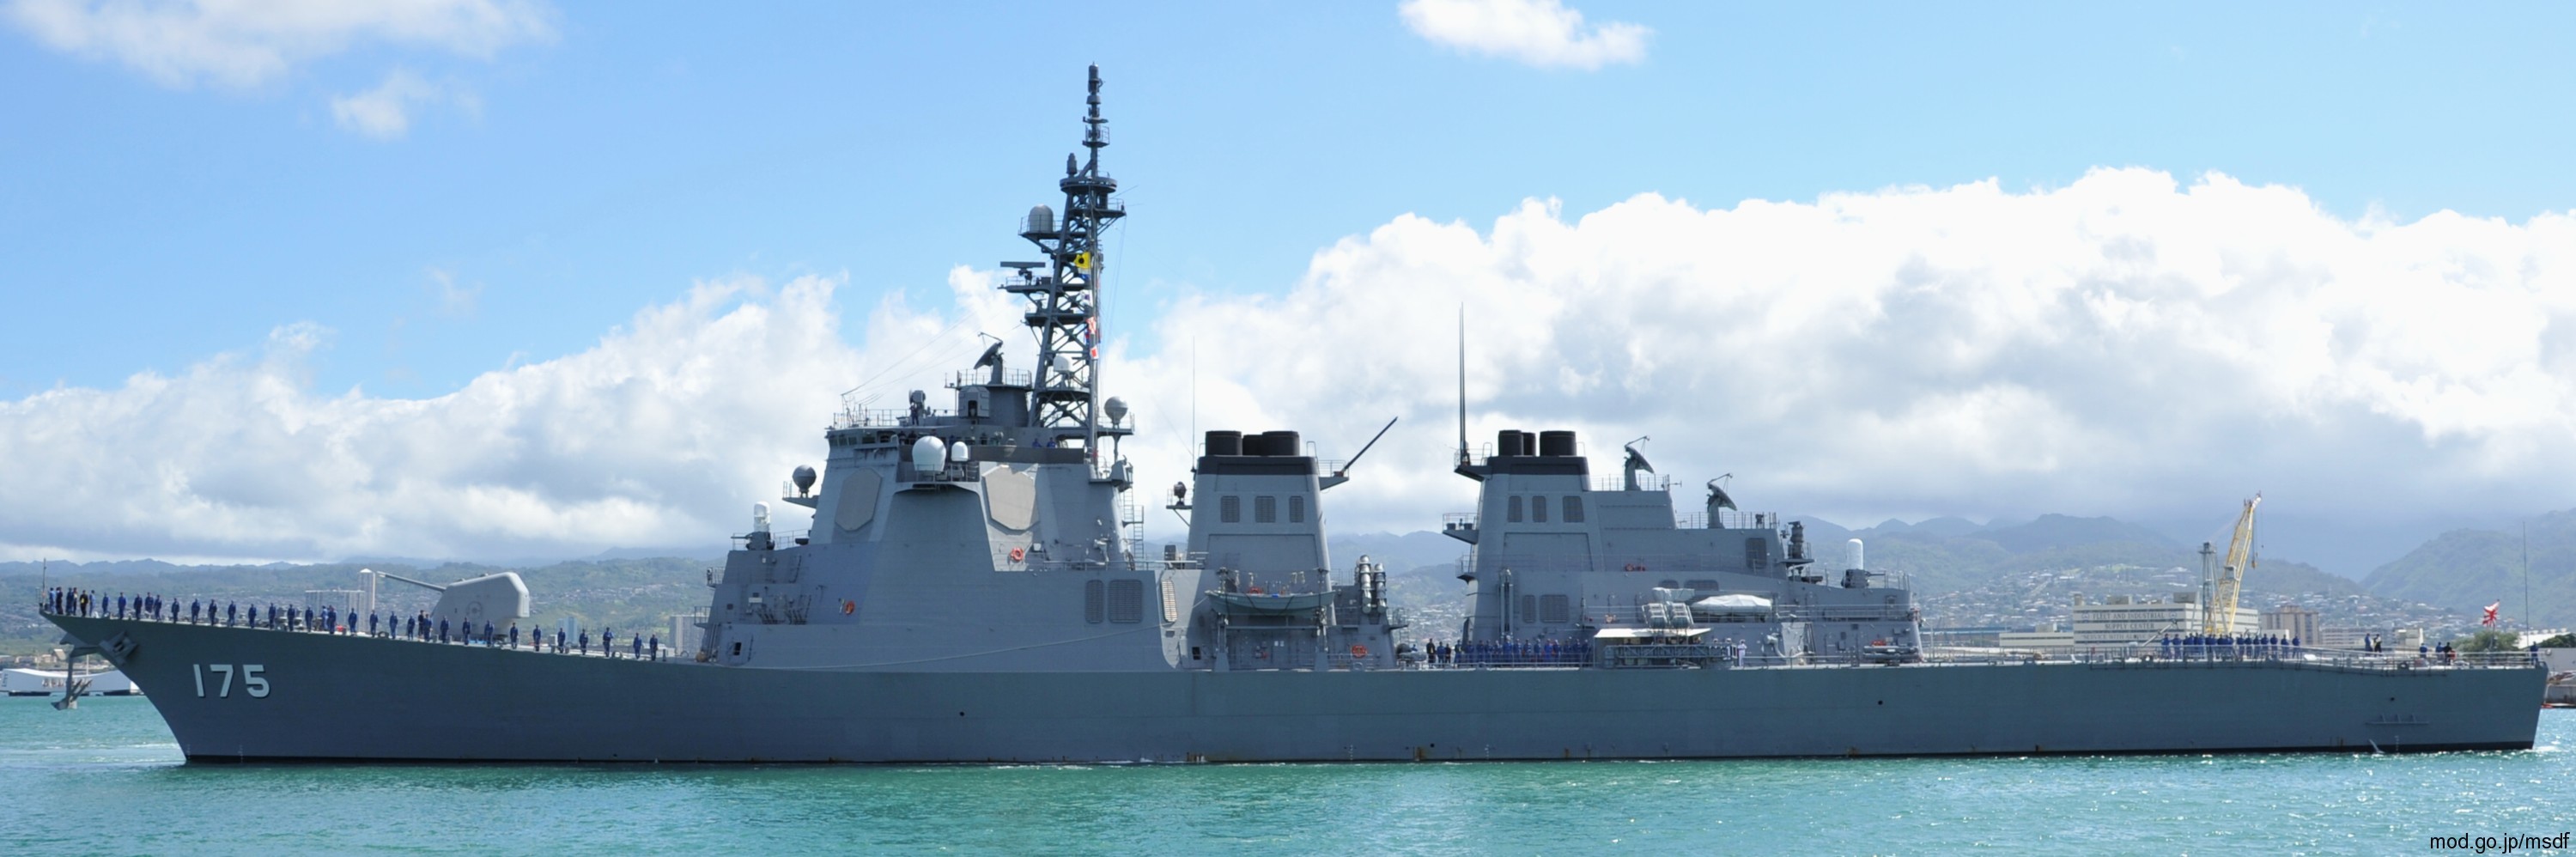 ddg-175 js myoko kongo class guided missile destroyer aegis japan maritime self defense force jmsdf 09